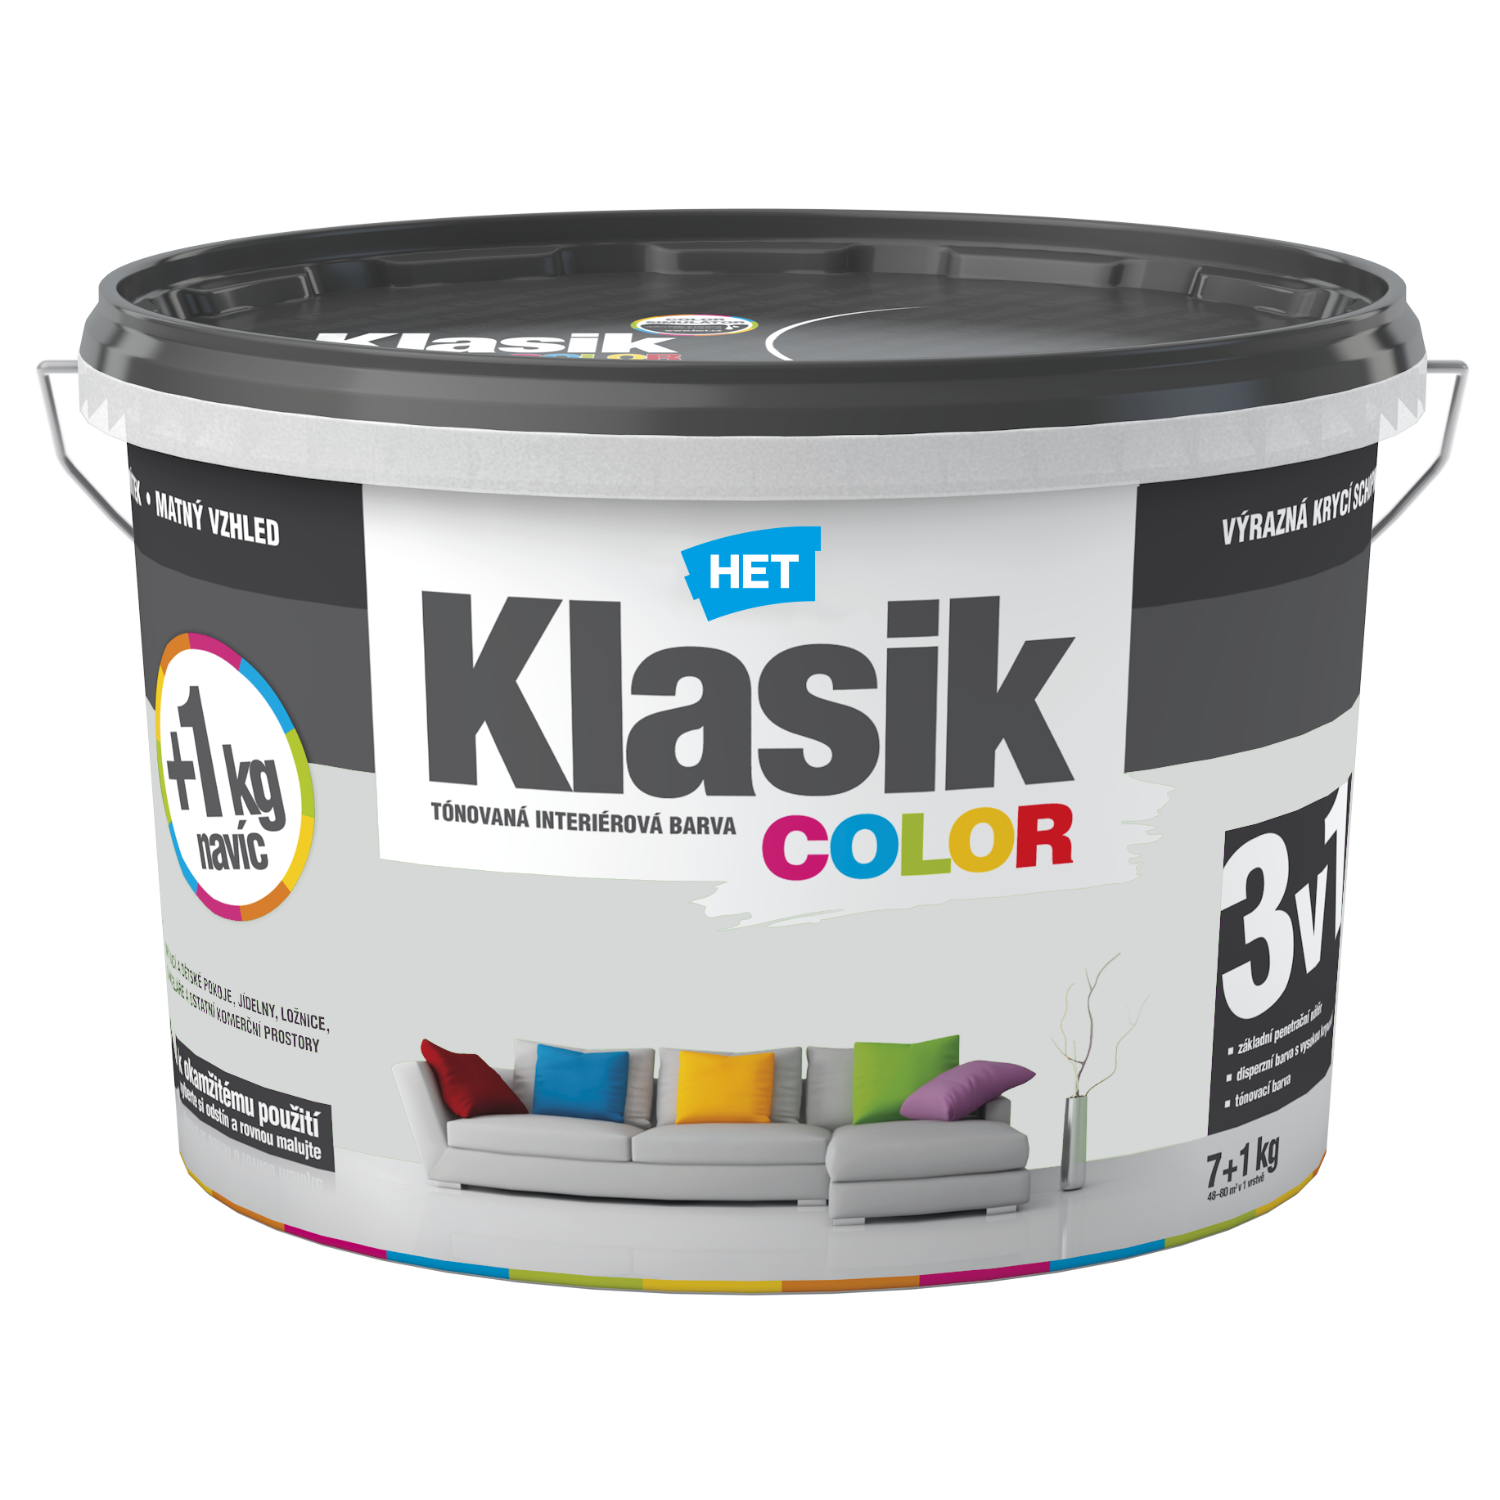 HET Klasik COLOR tónovaná interiérová akrylátová disperzná oteruvzdorná farba 4 kg, KC0828 - lososový